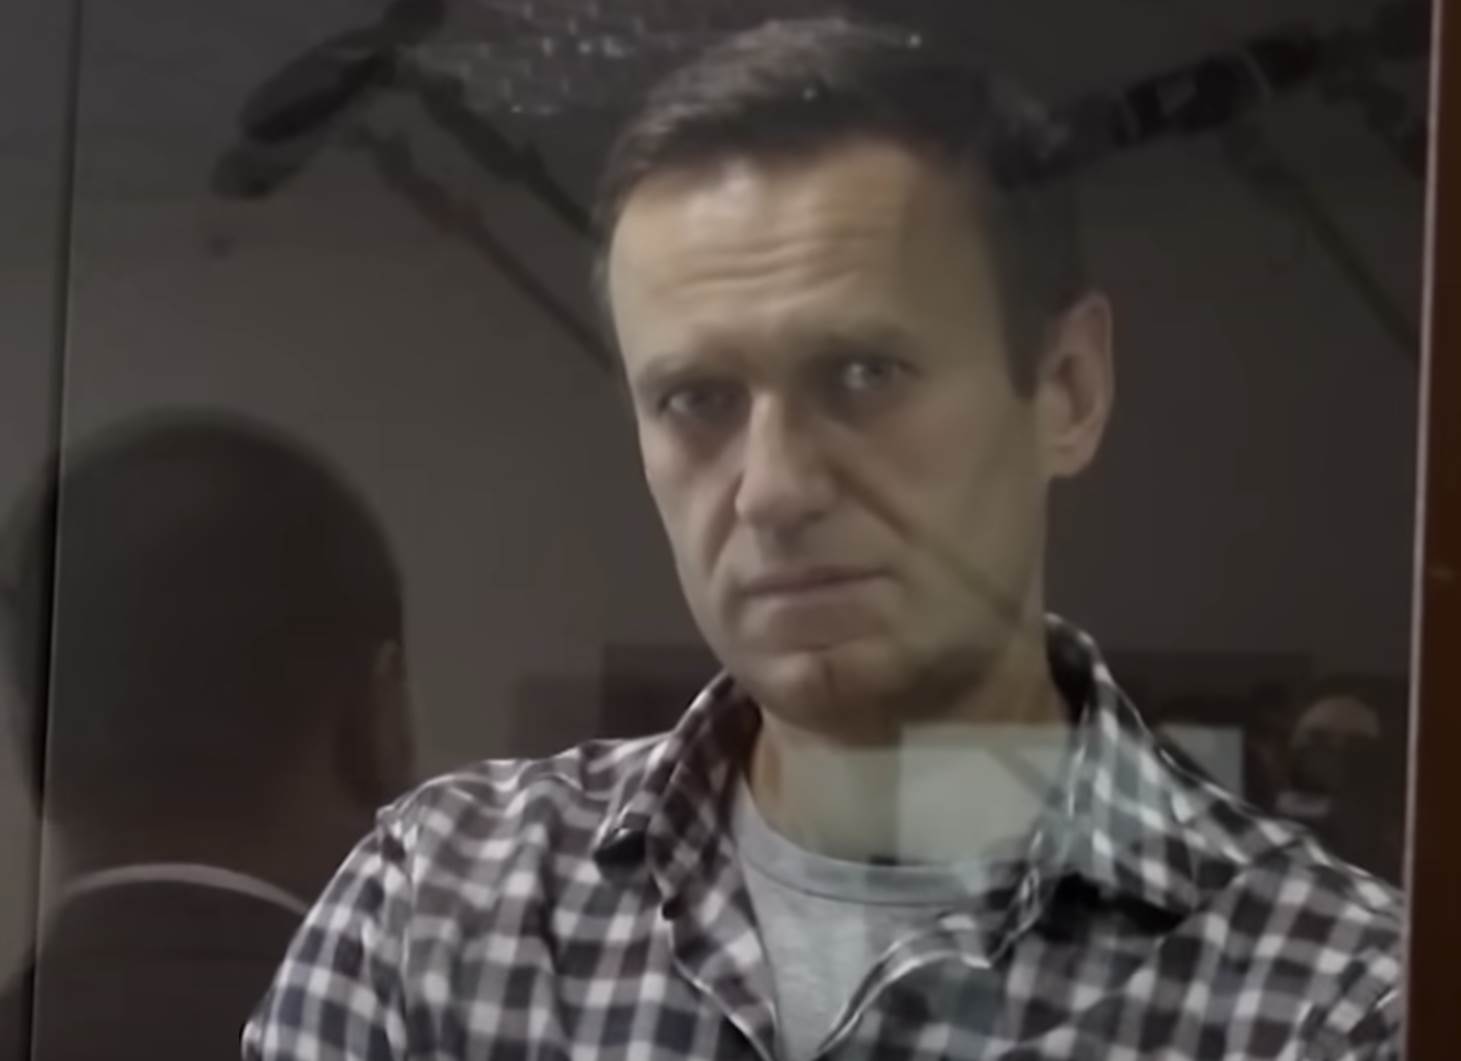  Aleksej Navaljni bio otrovan nervnim gasom 